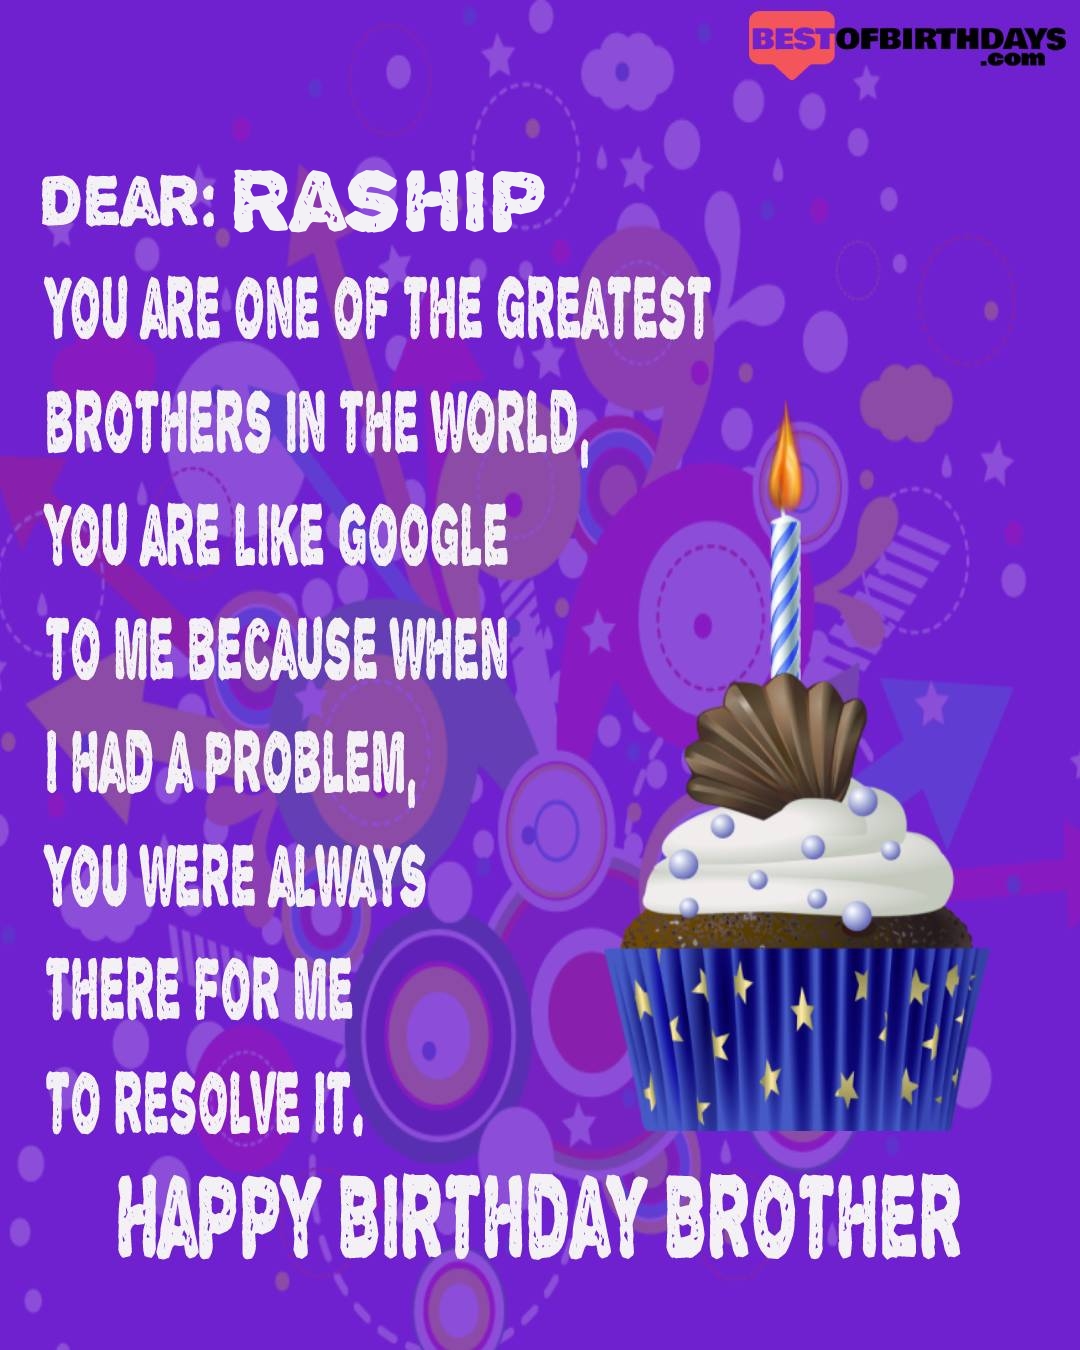 Happy birthday raship bhai brother bro